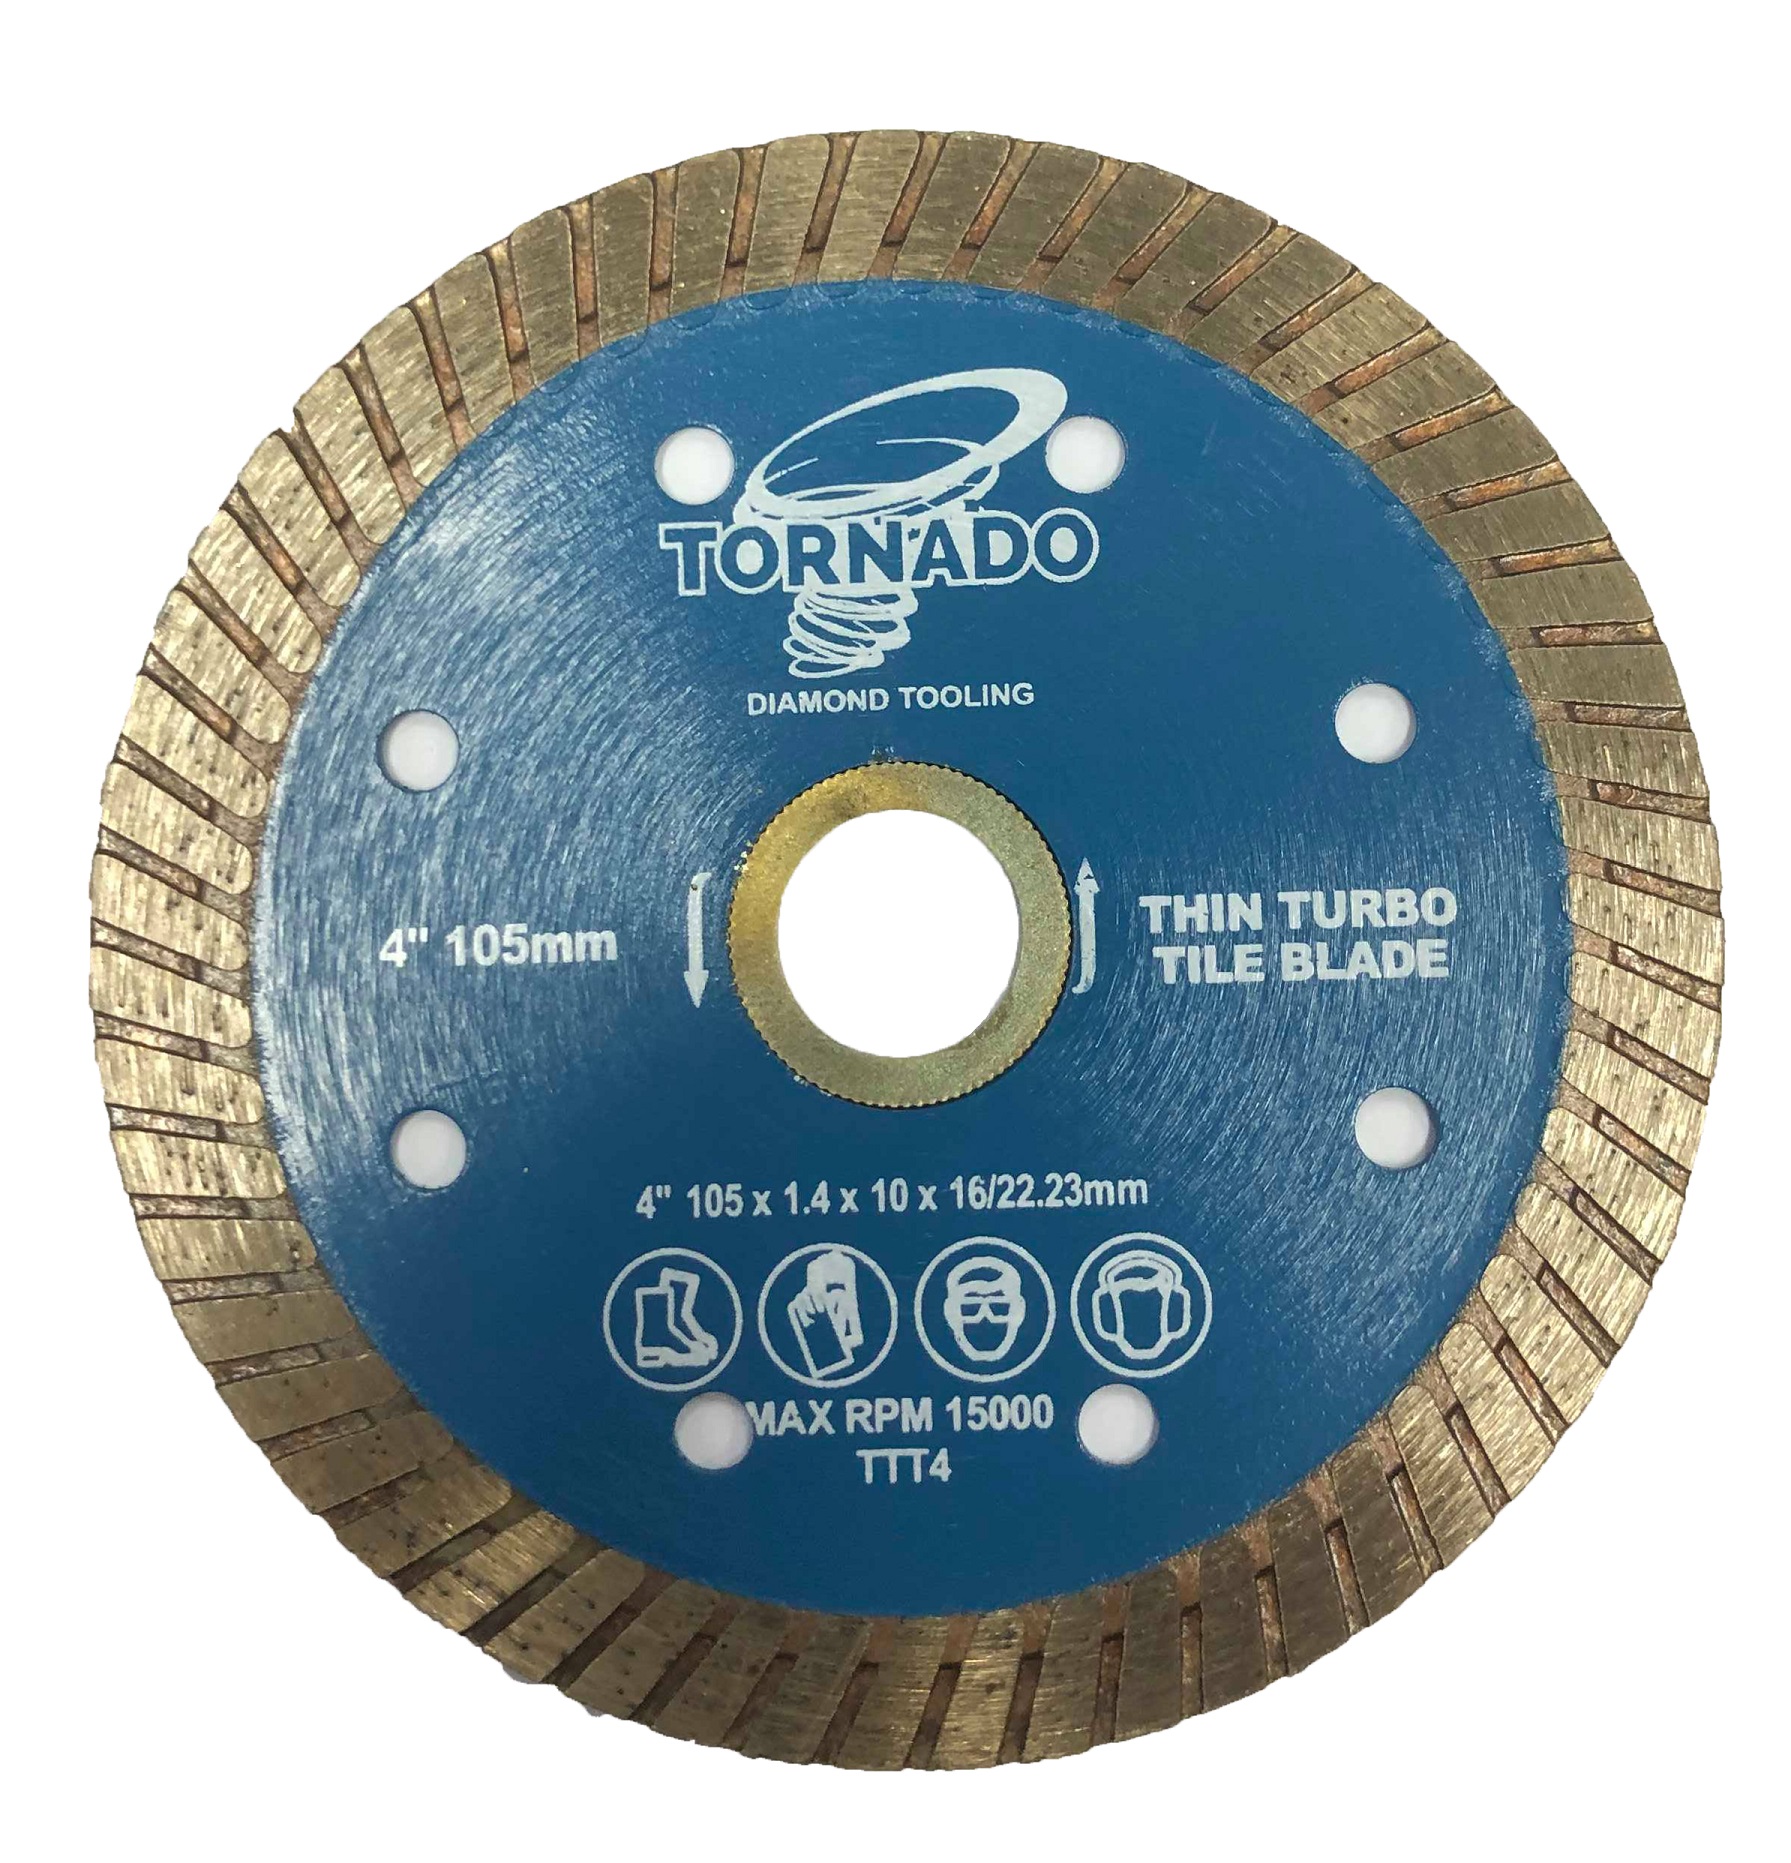 4" Thin Turbo Tile Blade